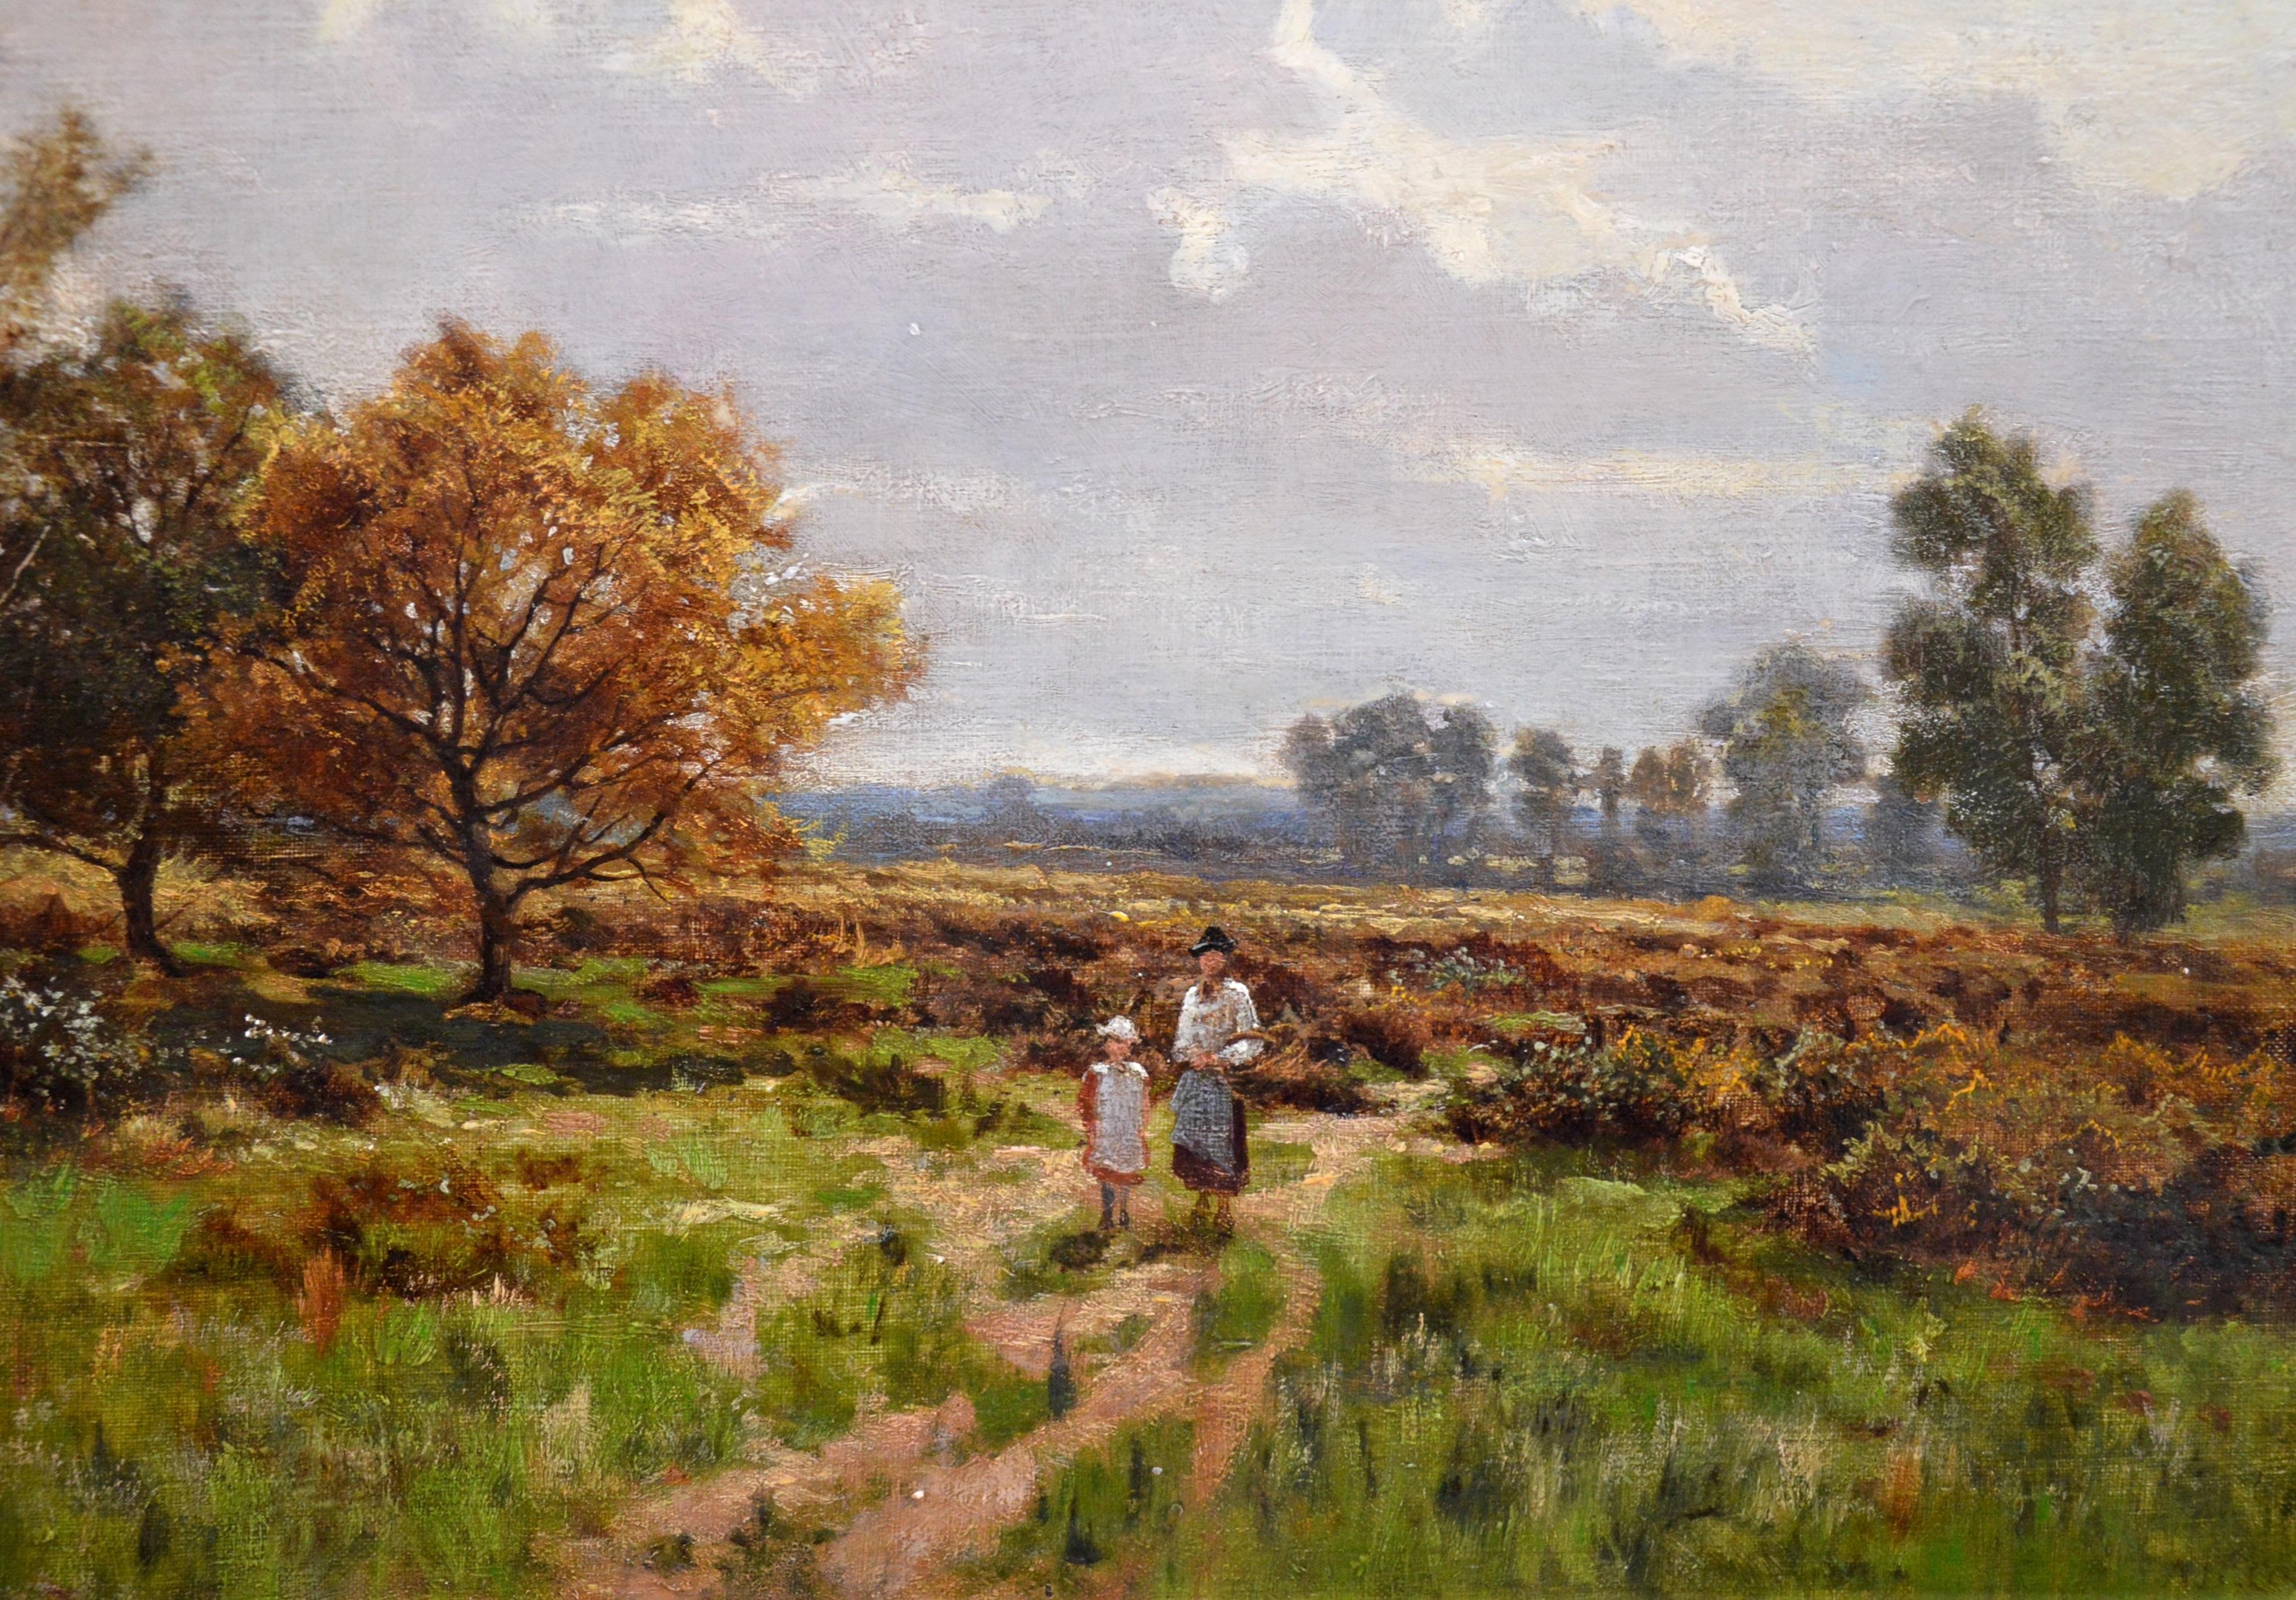 Near Stratford on Avon - 19th Century English Landscape Oil Painting  1